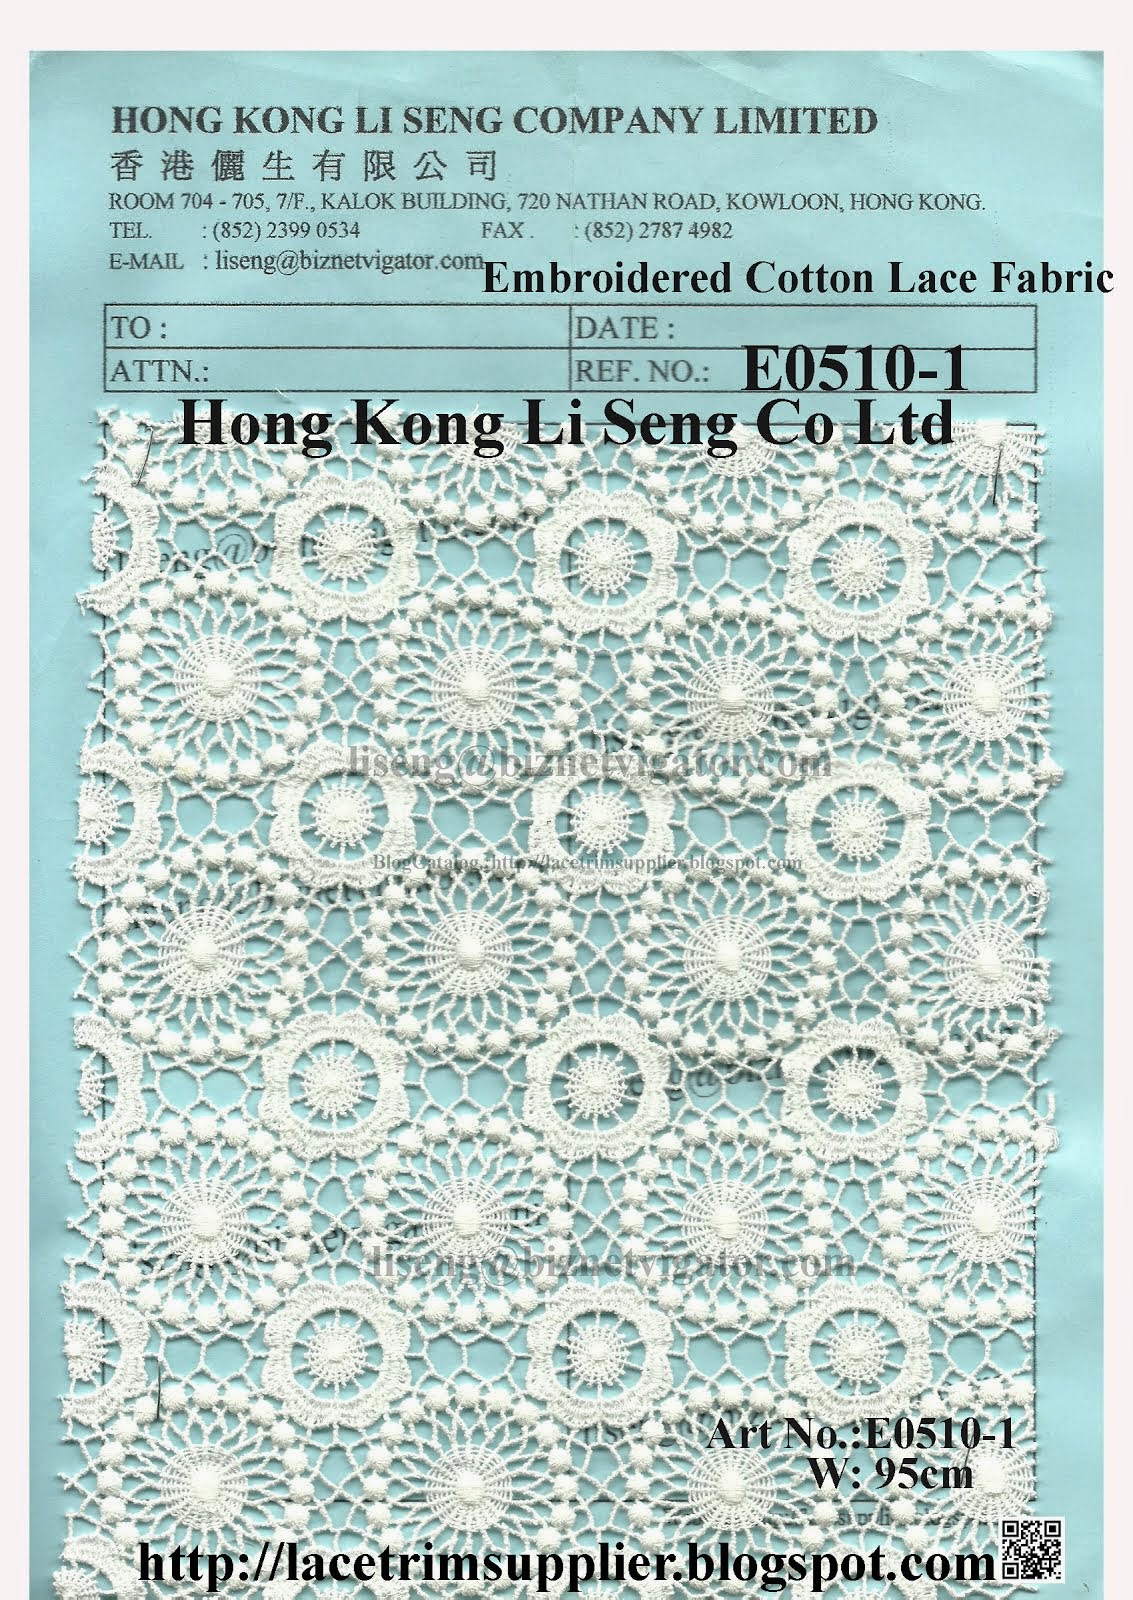 2014 - New Lace Fabric Pattern Shown On - Hong Kong Li Seng Co Ltd